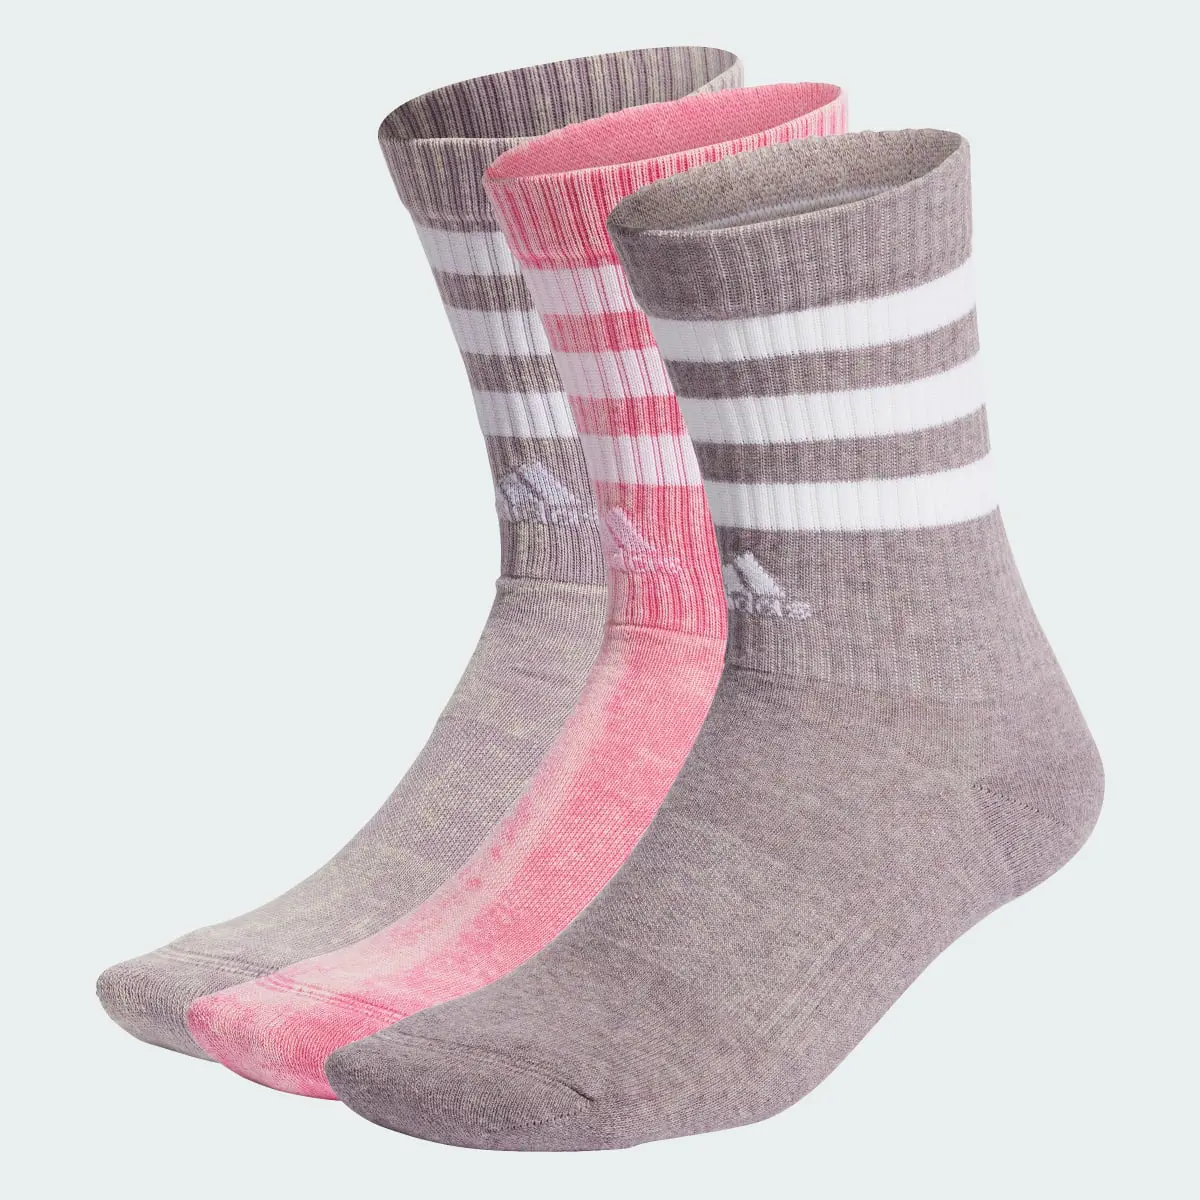 Adidas 3-Stripes Stonewash Crew Socks 3 Pairs. 2